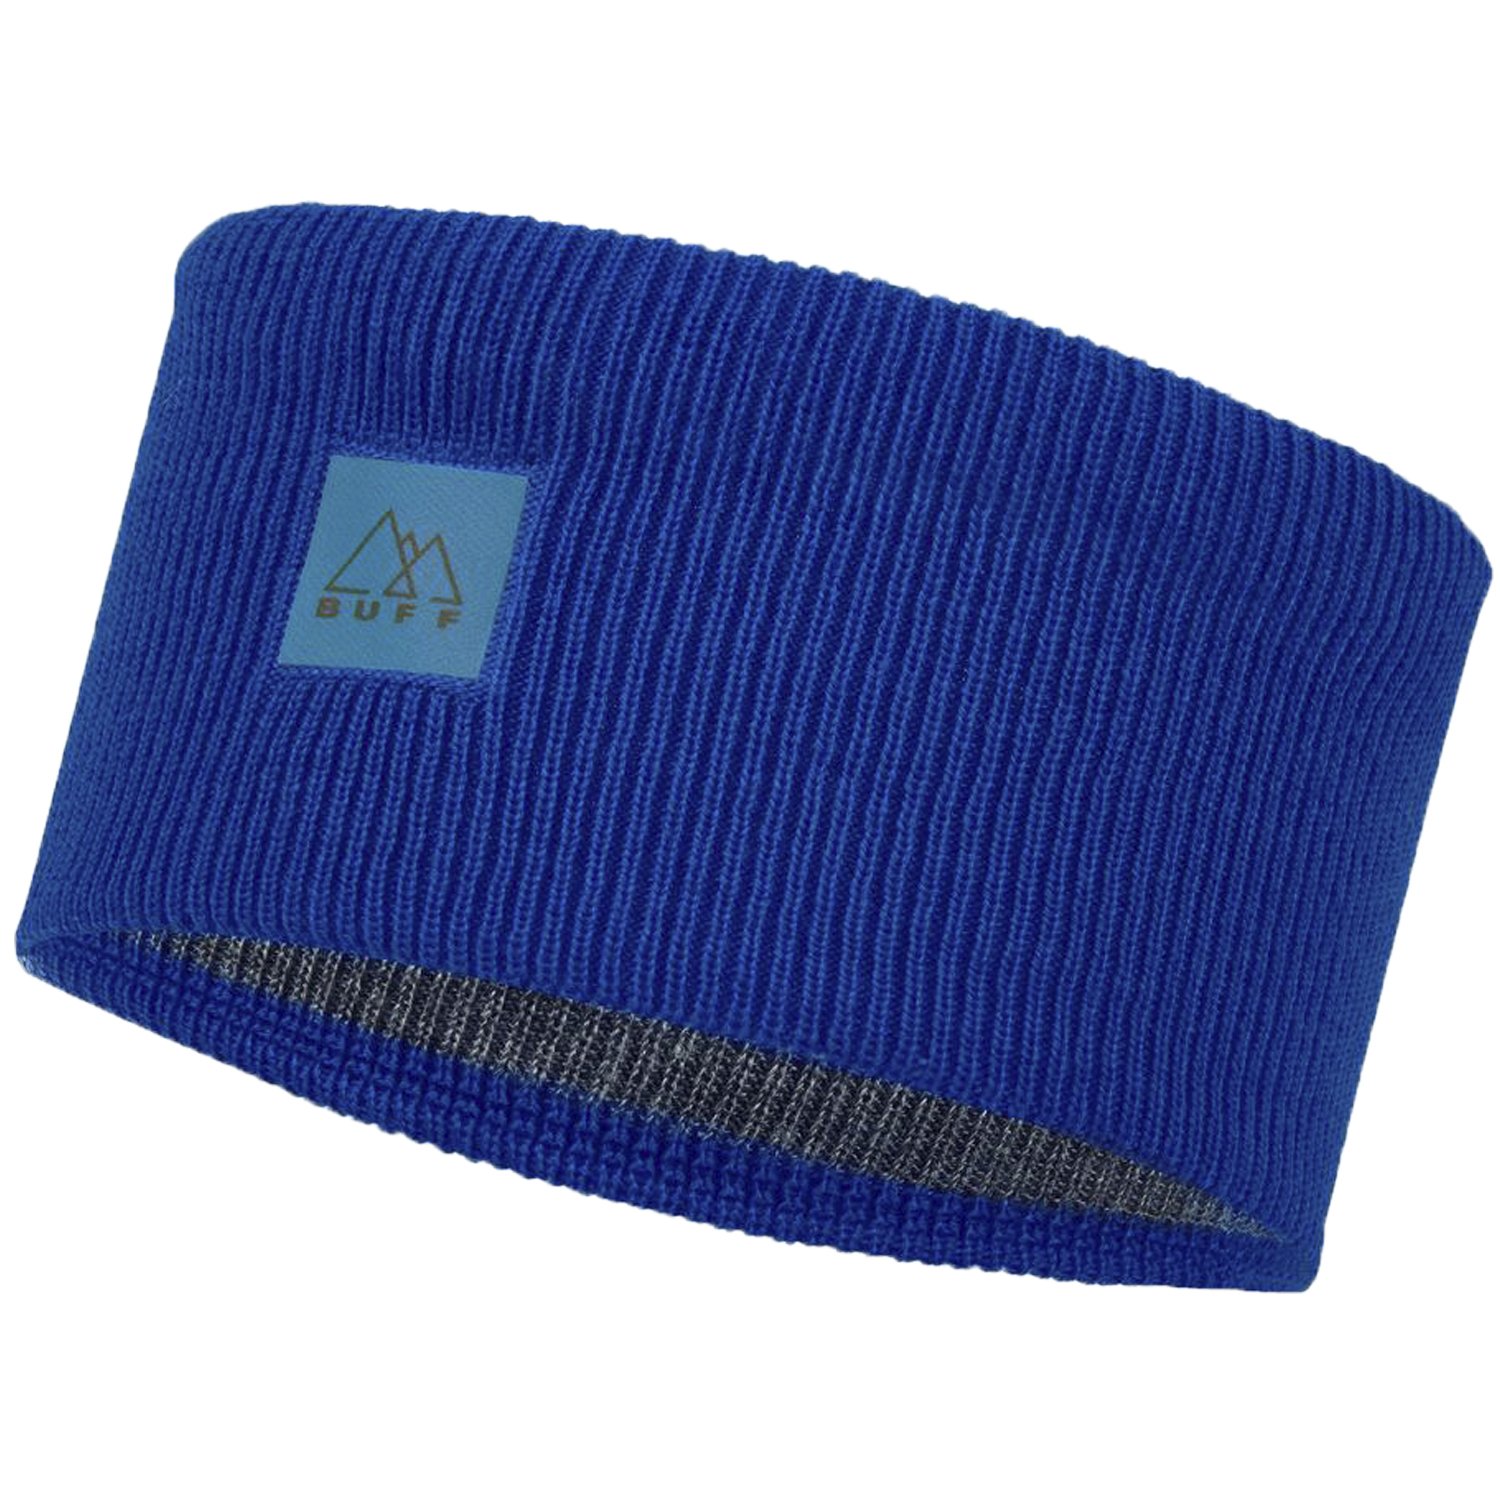 Повязка Buff Crossknit Headband Solid Azure Blue, 126484.720.10.00